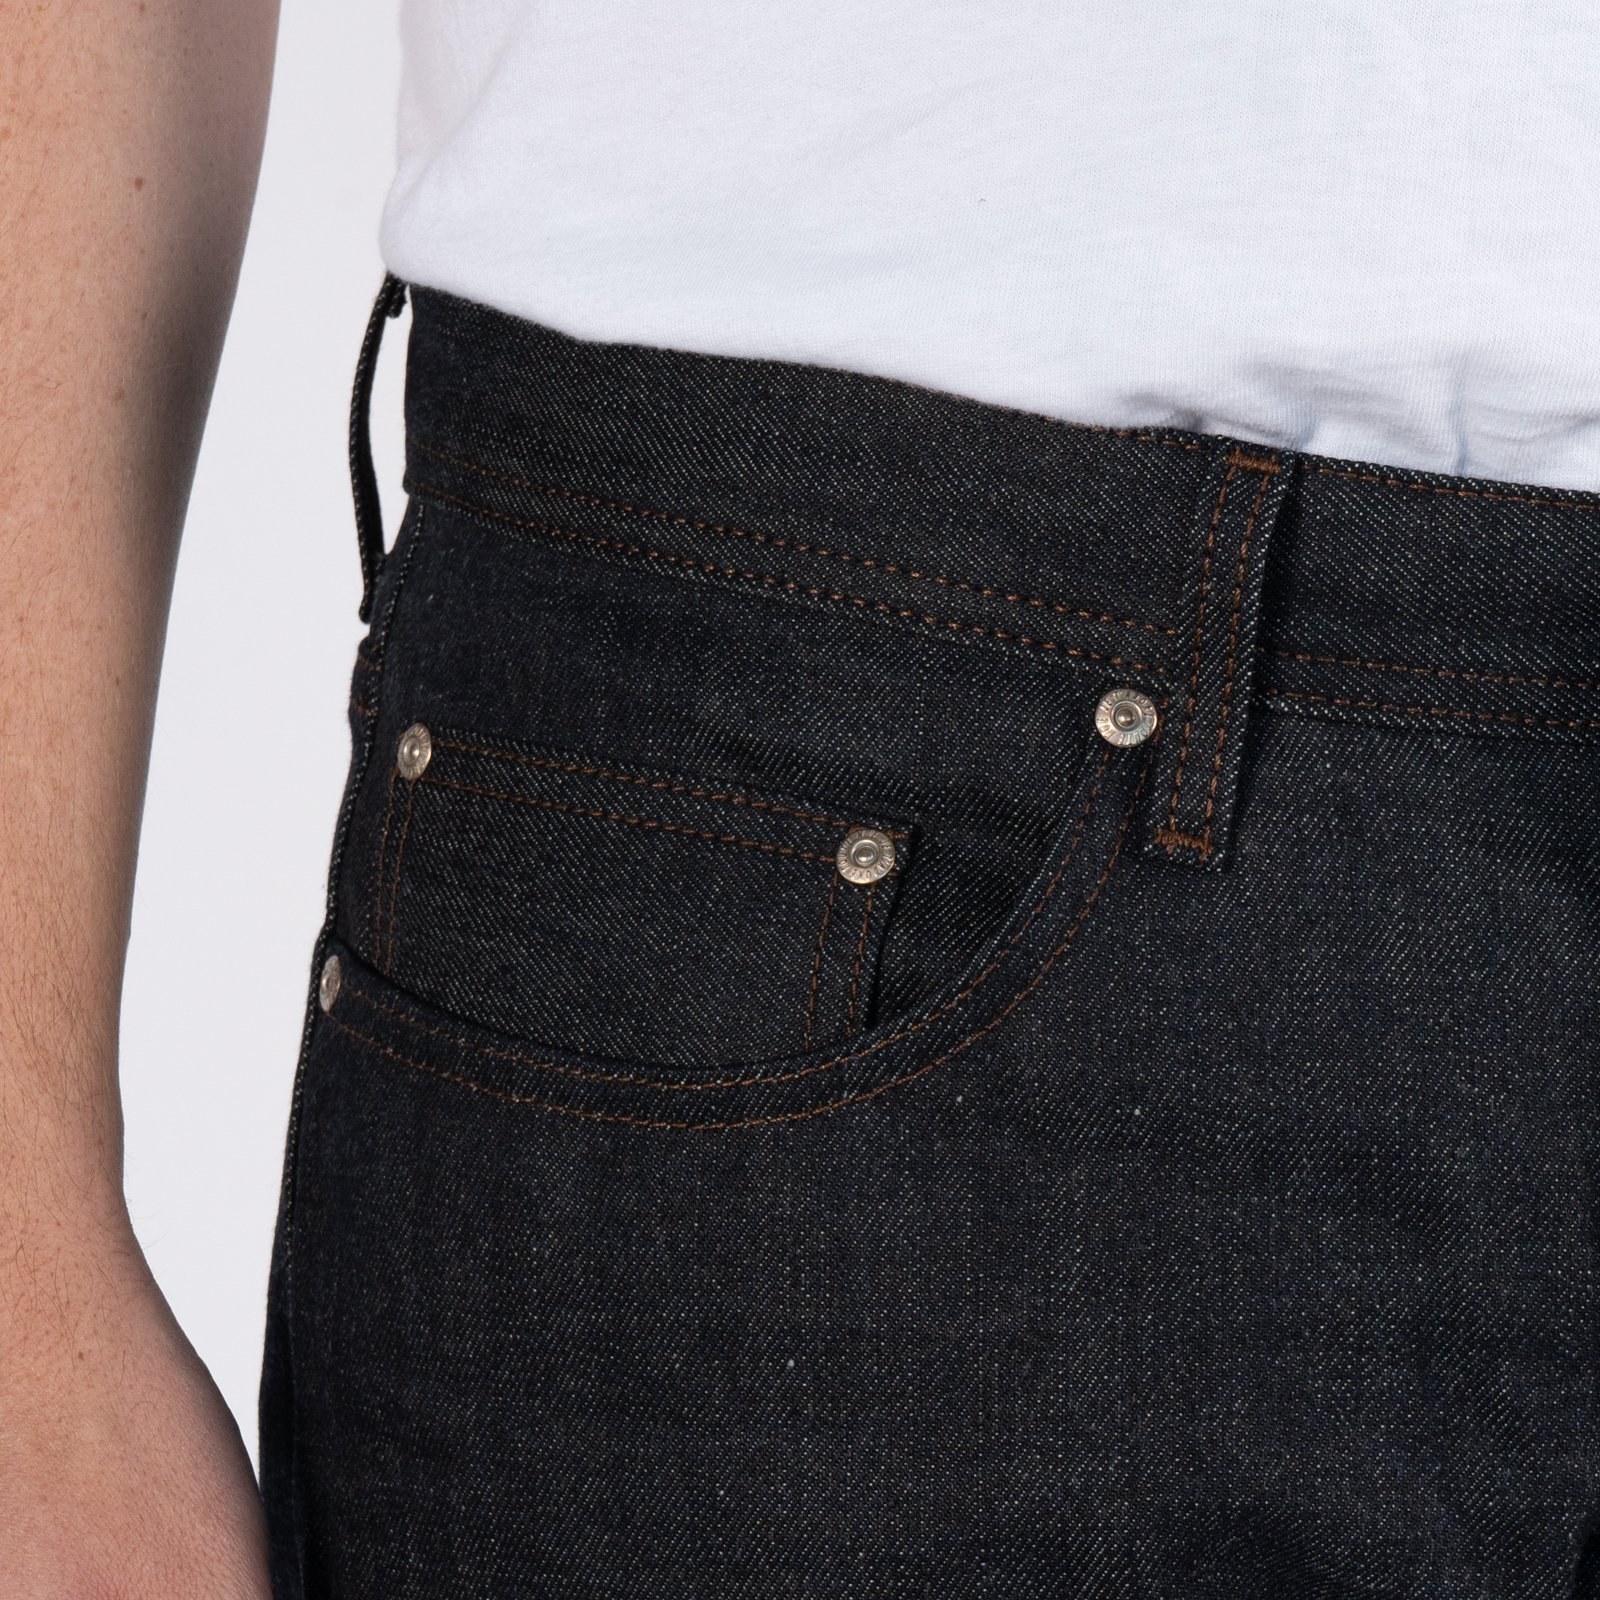  Blue Grass Jeans - coin pocket 